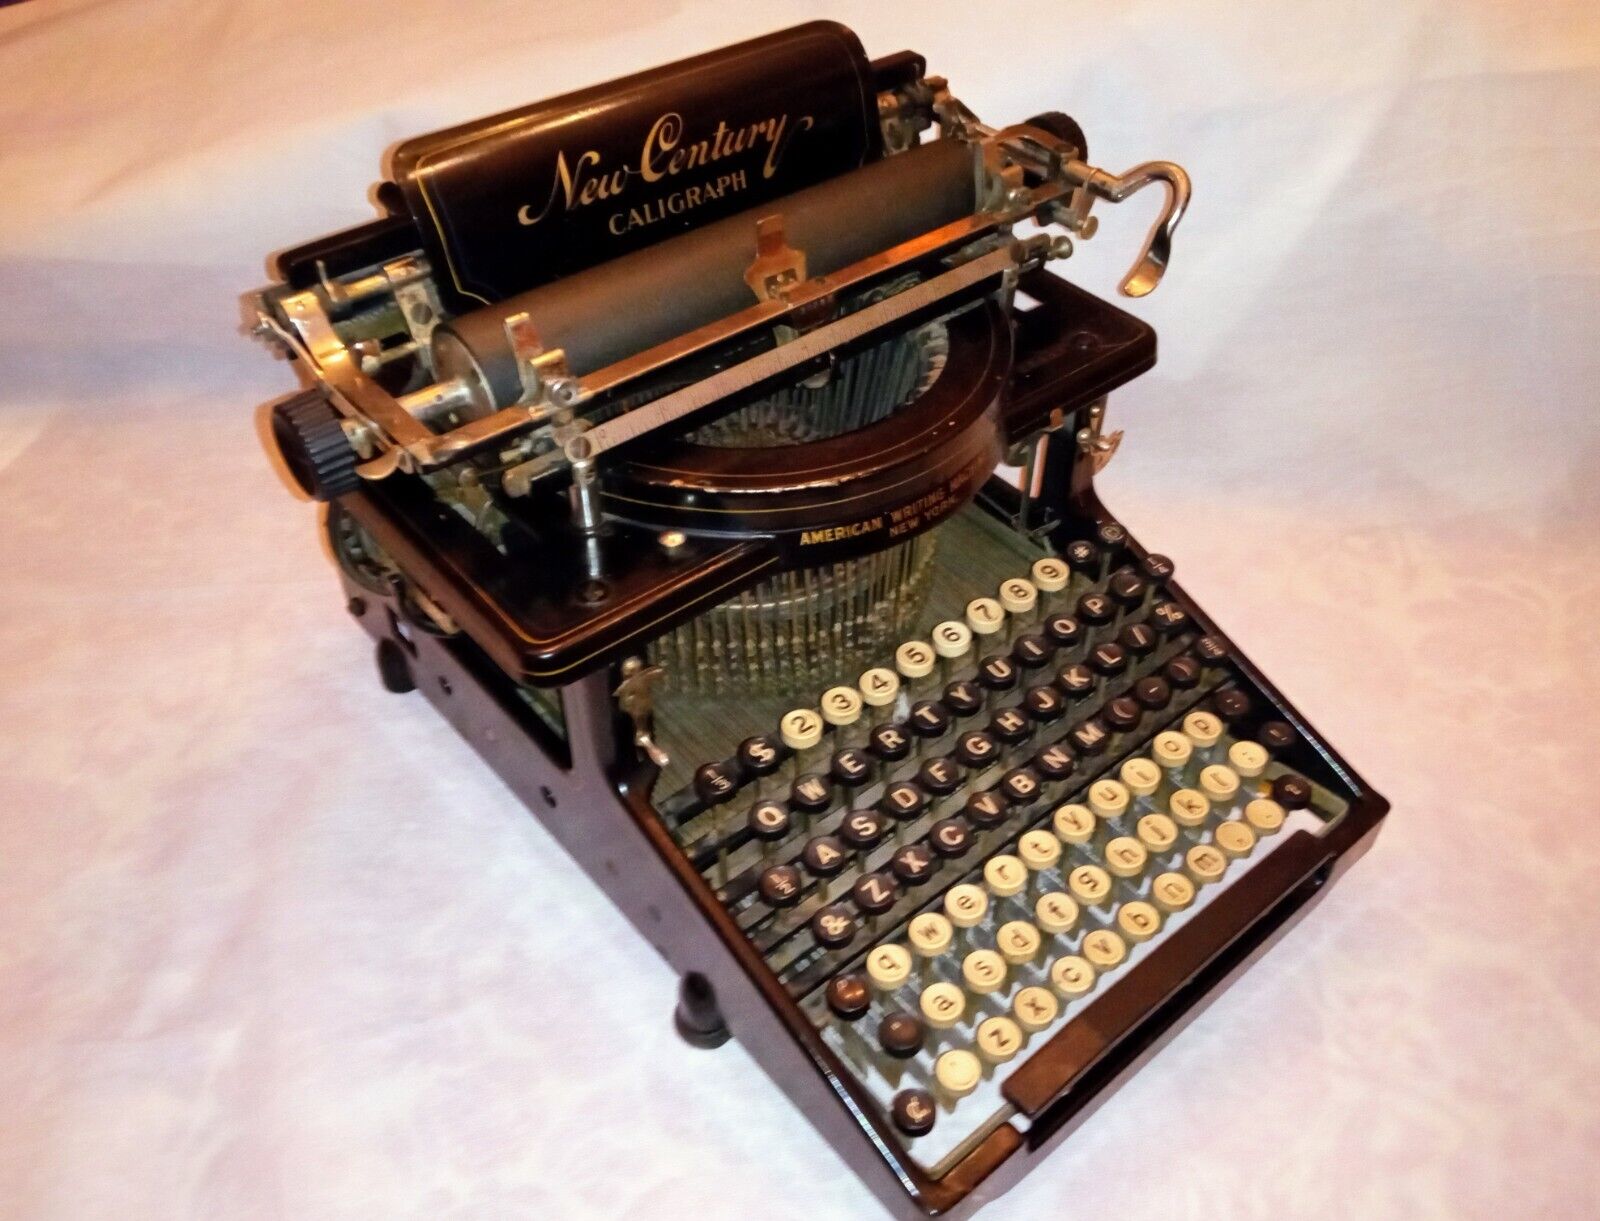 New Century Caligraph American Writing Machine Co No 6 1900's Antique Typewriter